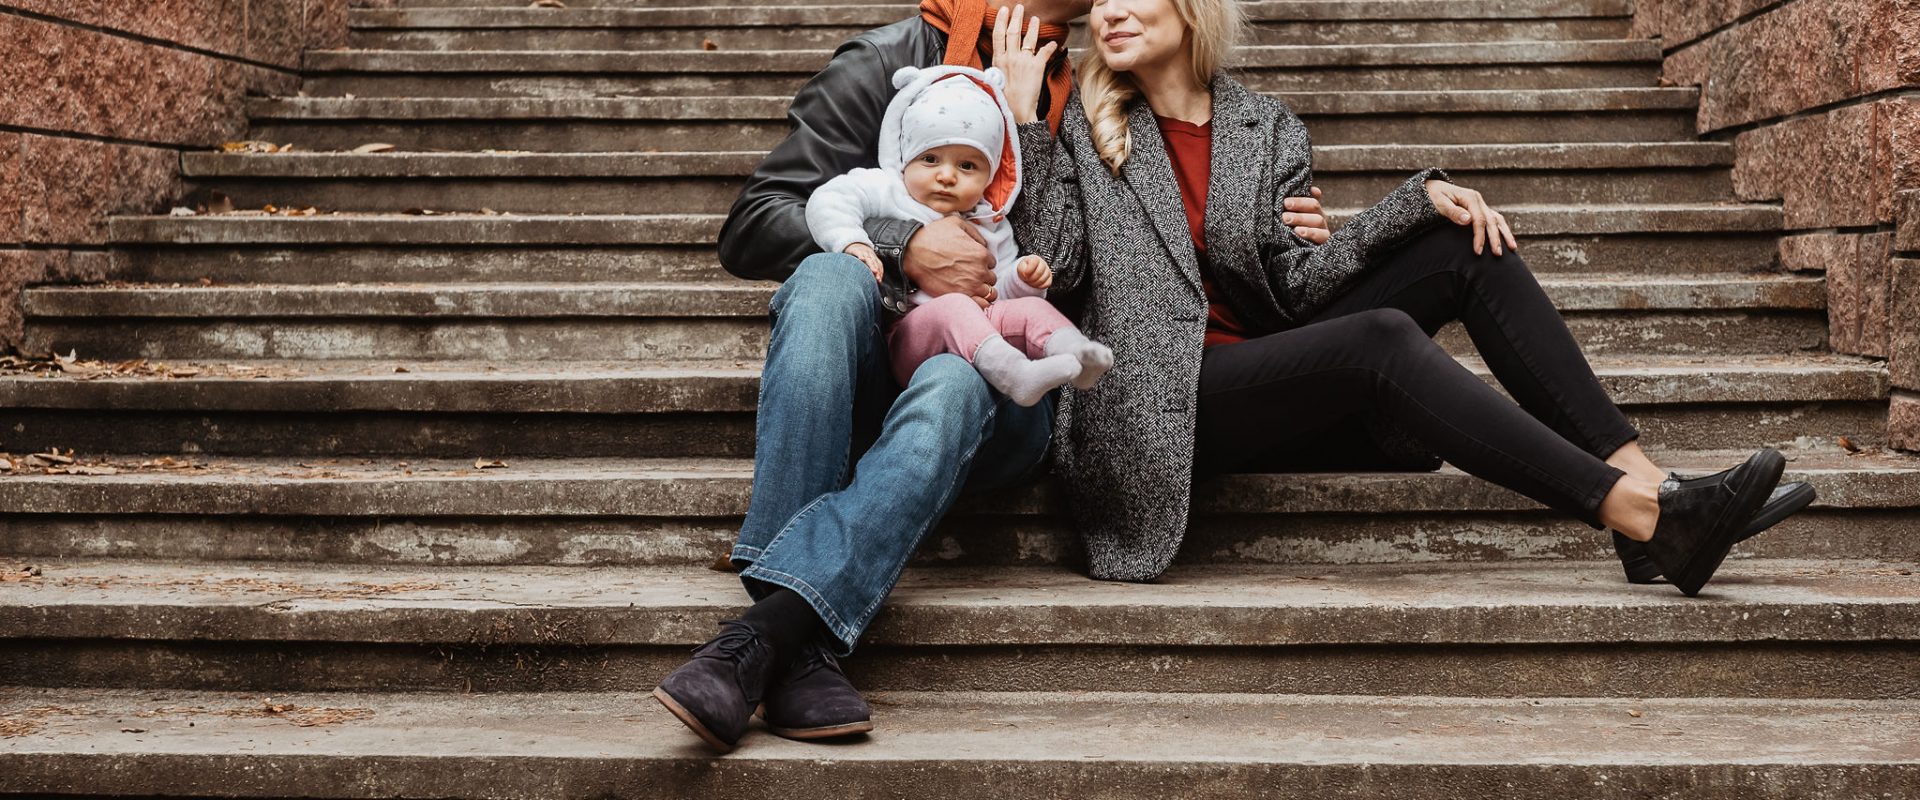 Monika Sobień-Górska i Robert Górski z córką siedzą przytuleni na schodkach.